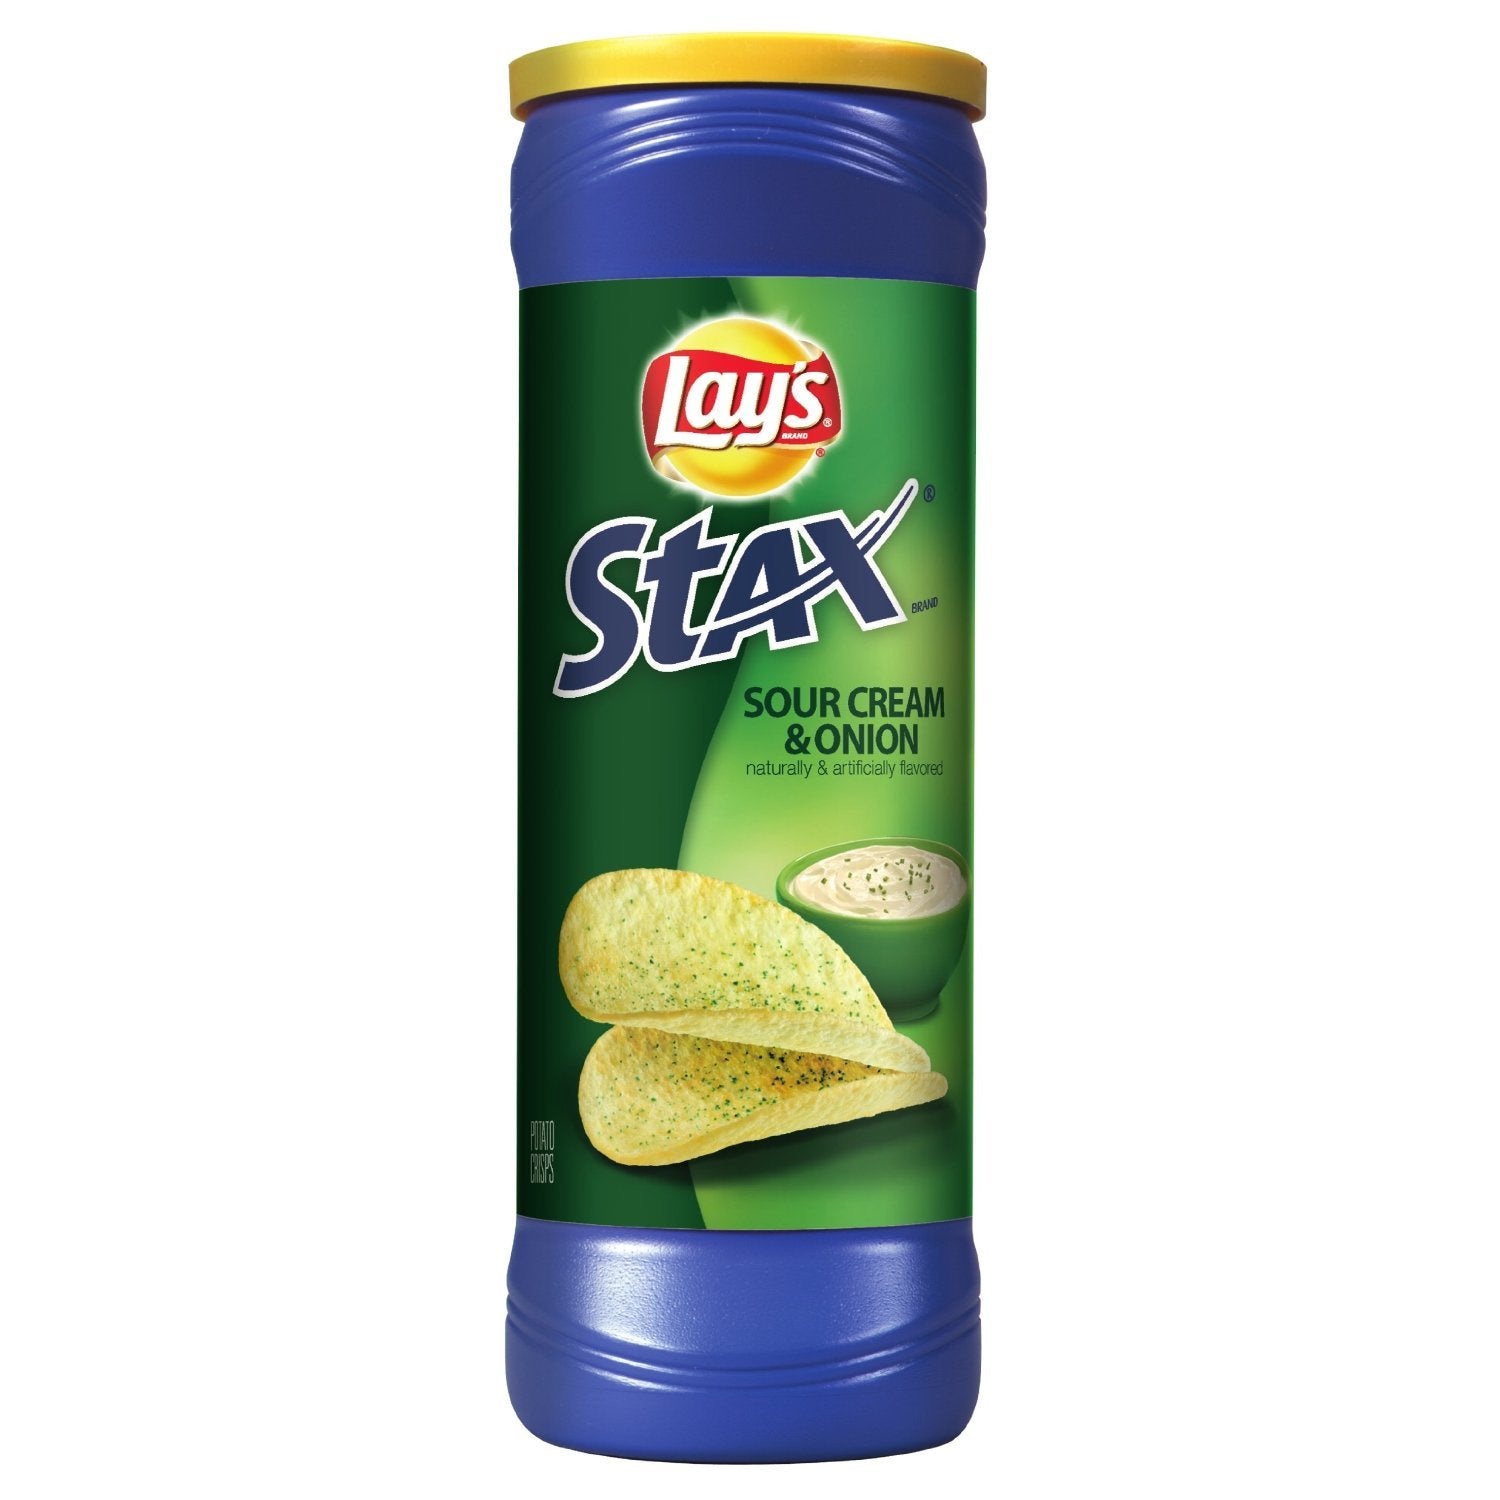 LAY'S Stax Sour Cream & Onion 5.5oz